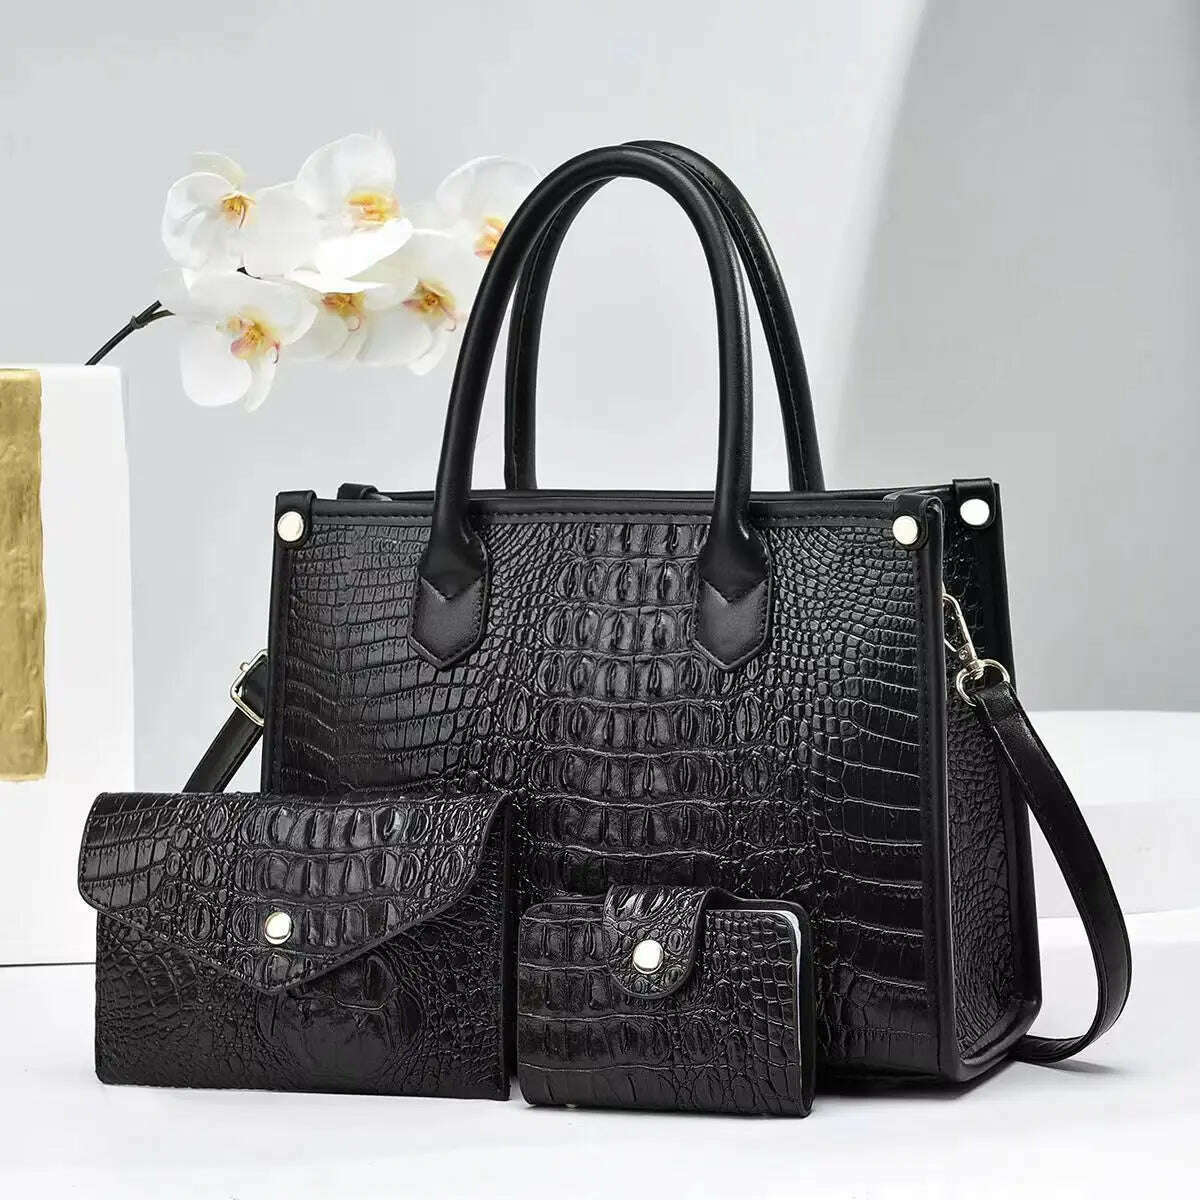 KIMLUD, 3 Pieces Sets Shoulder Bag for Women Retro Crocodile Pattern High Quality Leather Luxury Designer Crossbody Commute Tote Handbag, Black, KIMLUD Women's Clothes